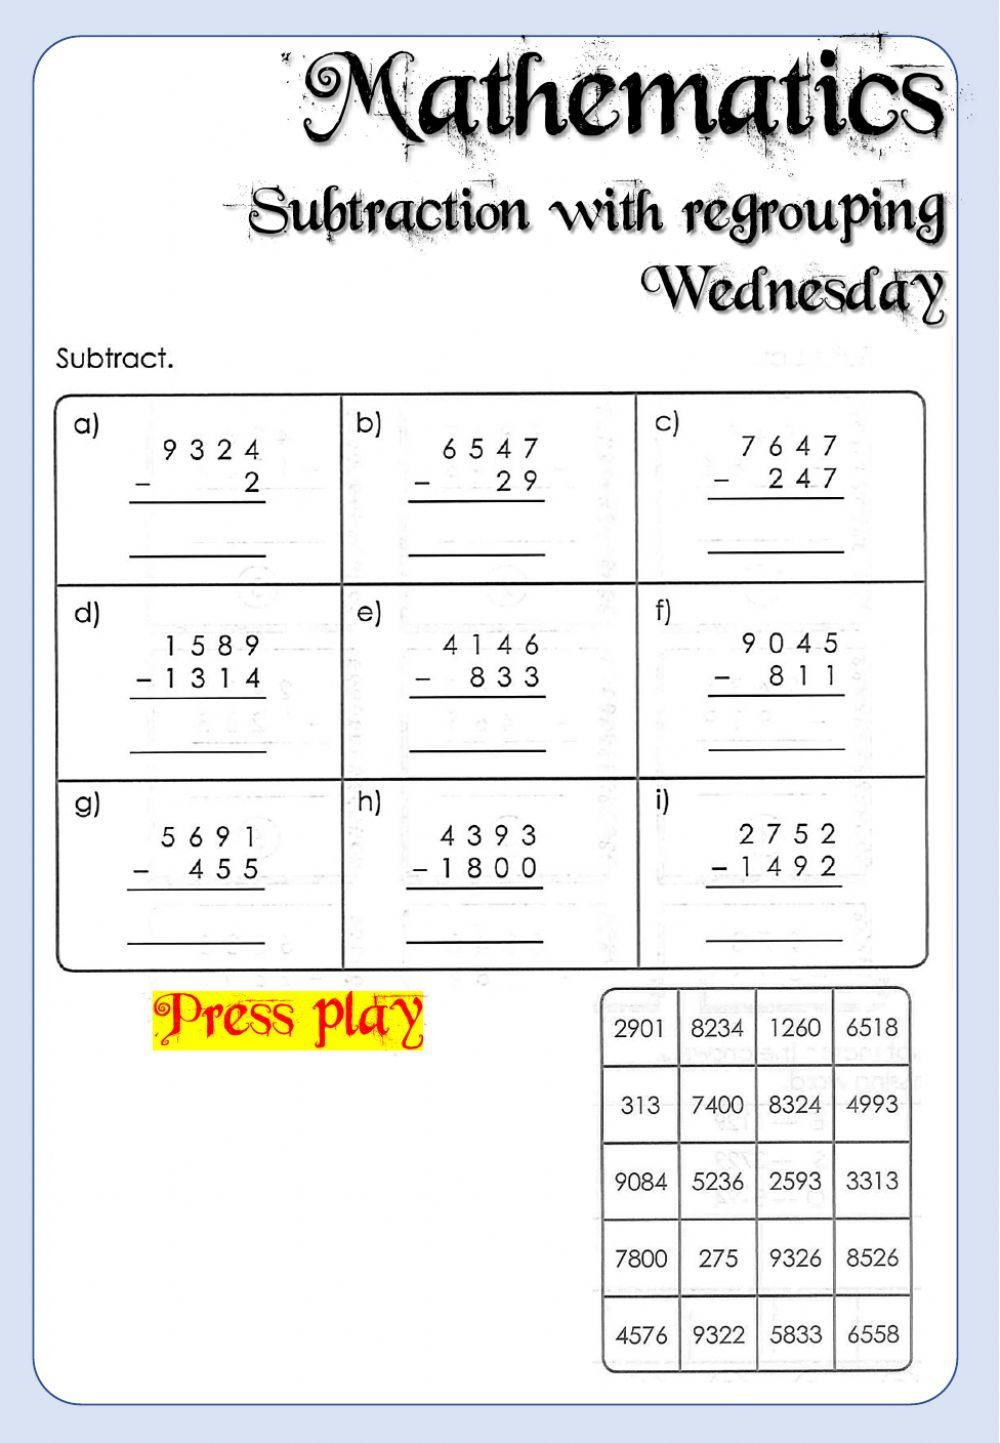 Week 19 - Mathematics - Wednesday